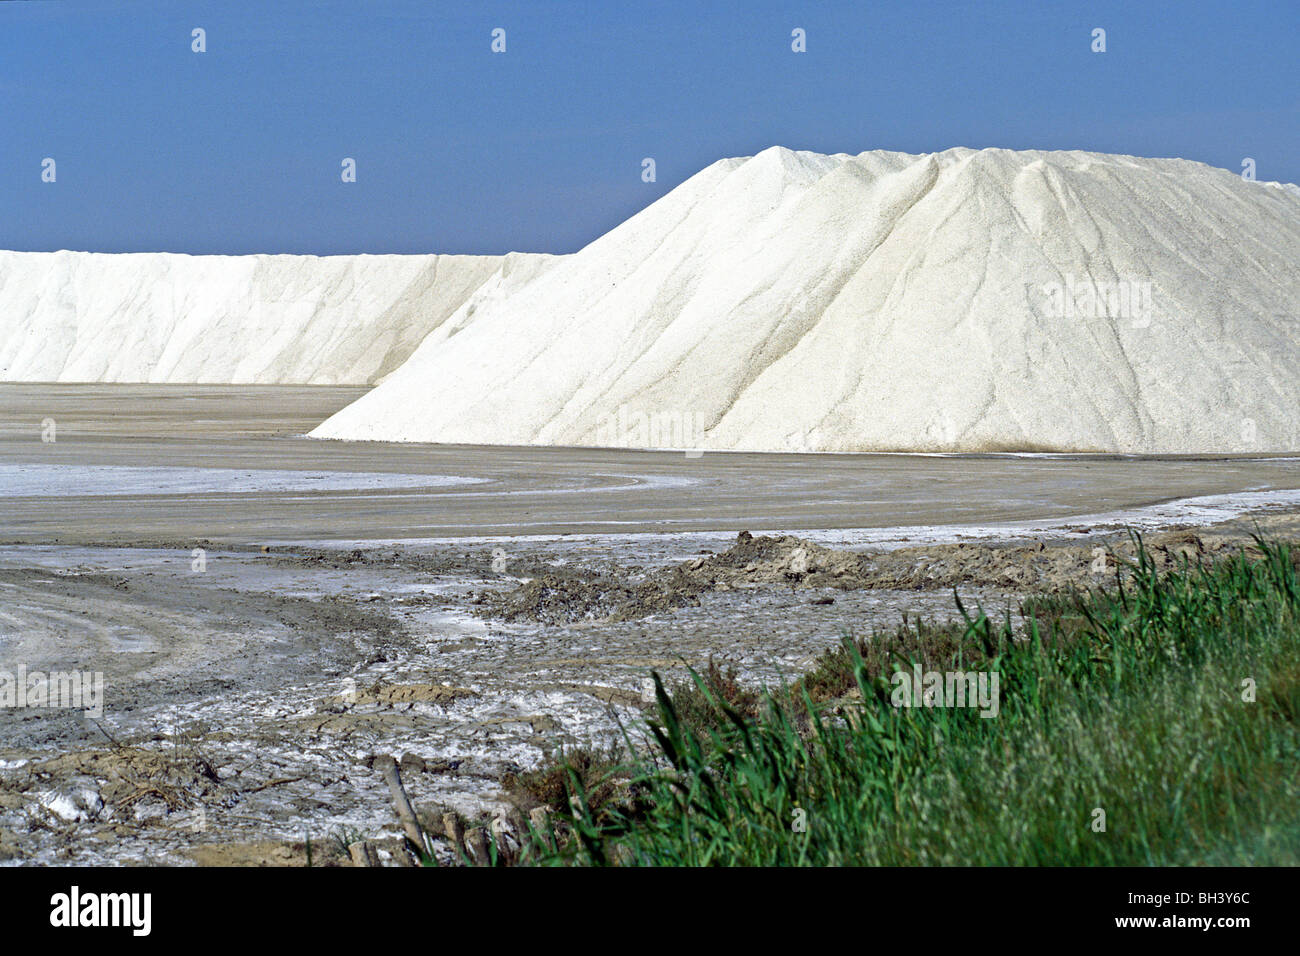 THE SALT WORKS OF SALINS DE GIRAUD, CAMARGUE, BOUCHES-DU-RHONE (13), FRANCE  Stock Photo - Alamy